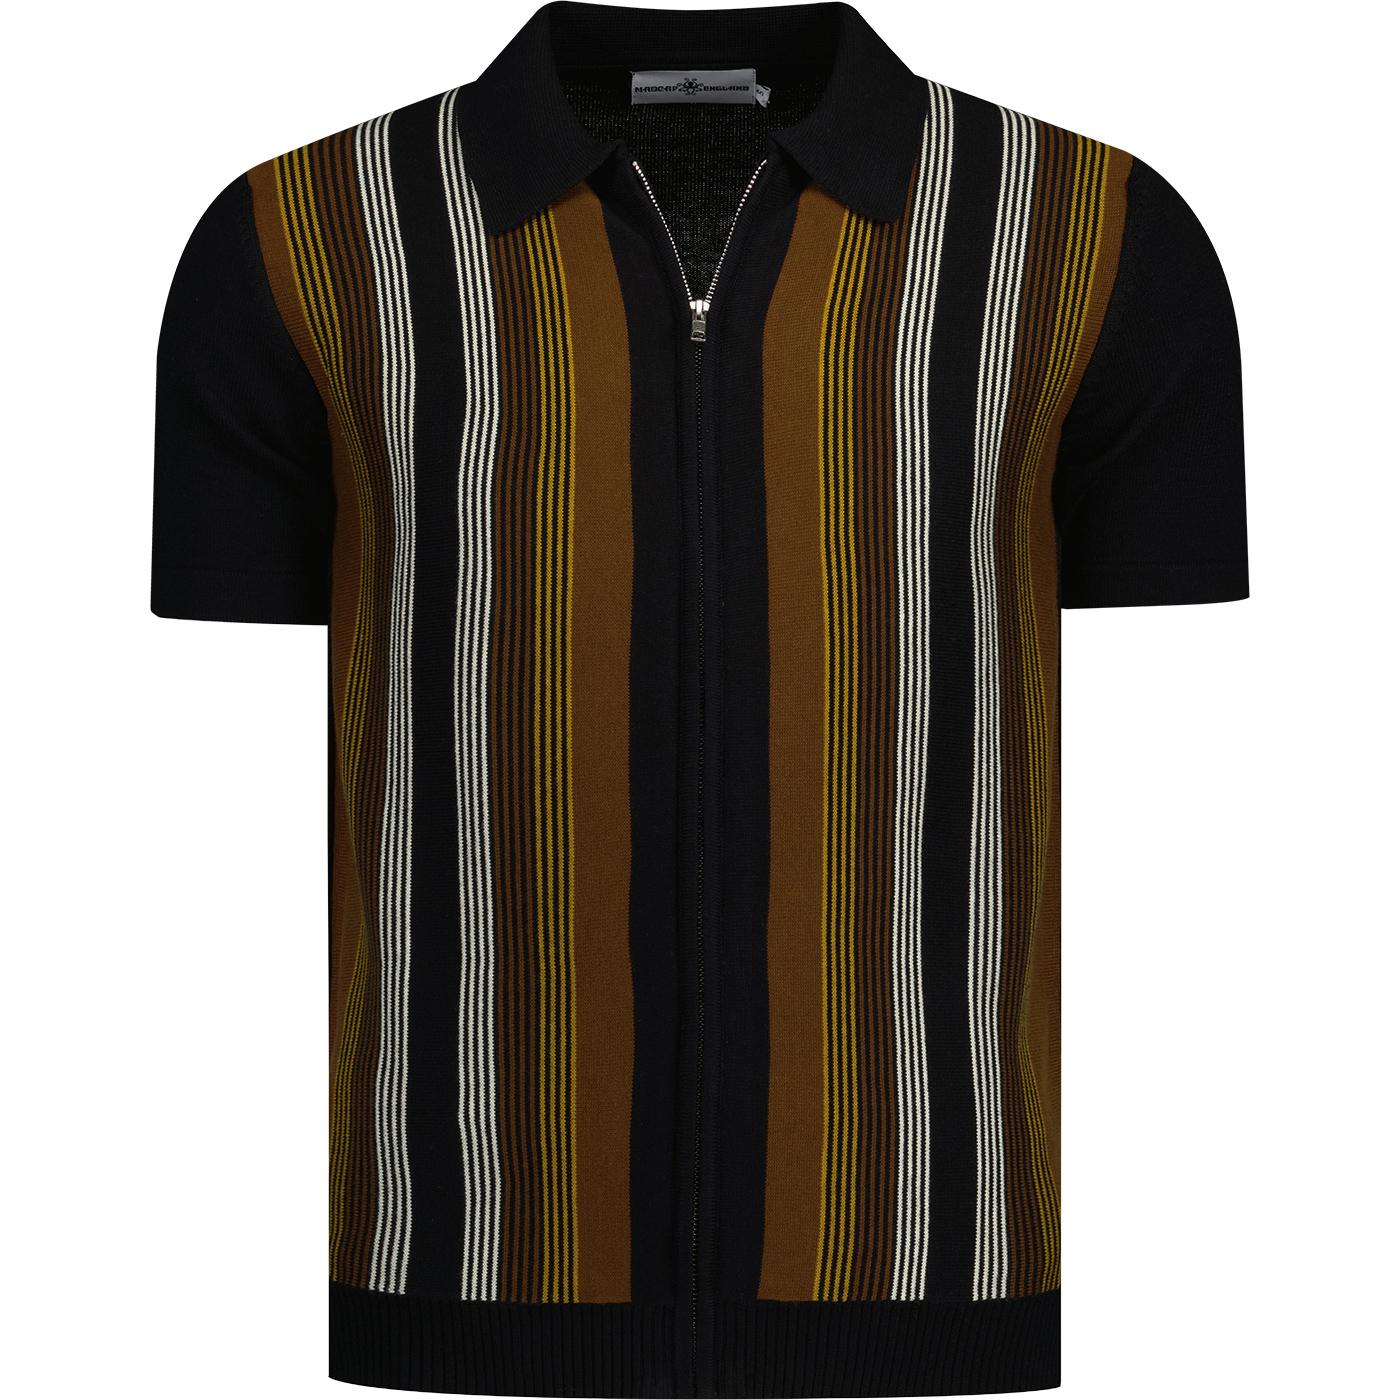 madcap england mens capitol vertical stripes zip through polo tshirt black